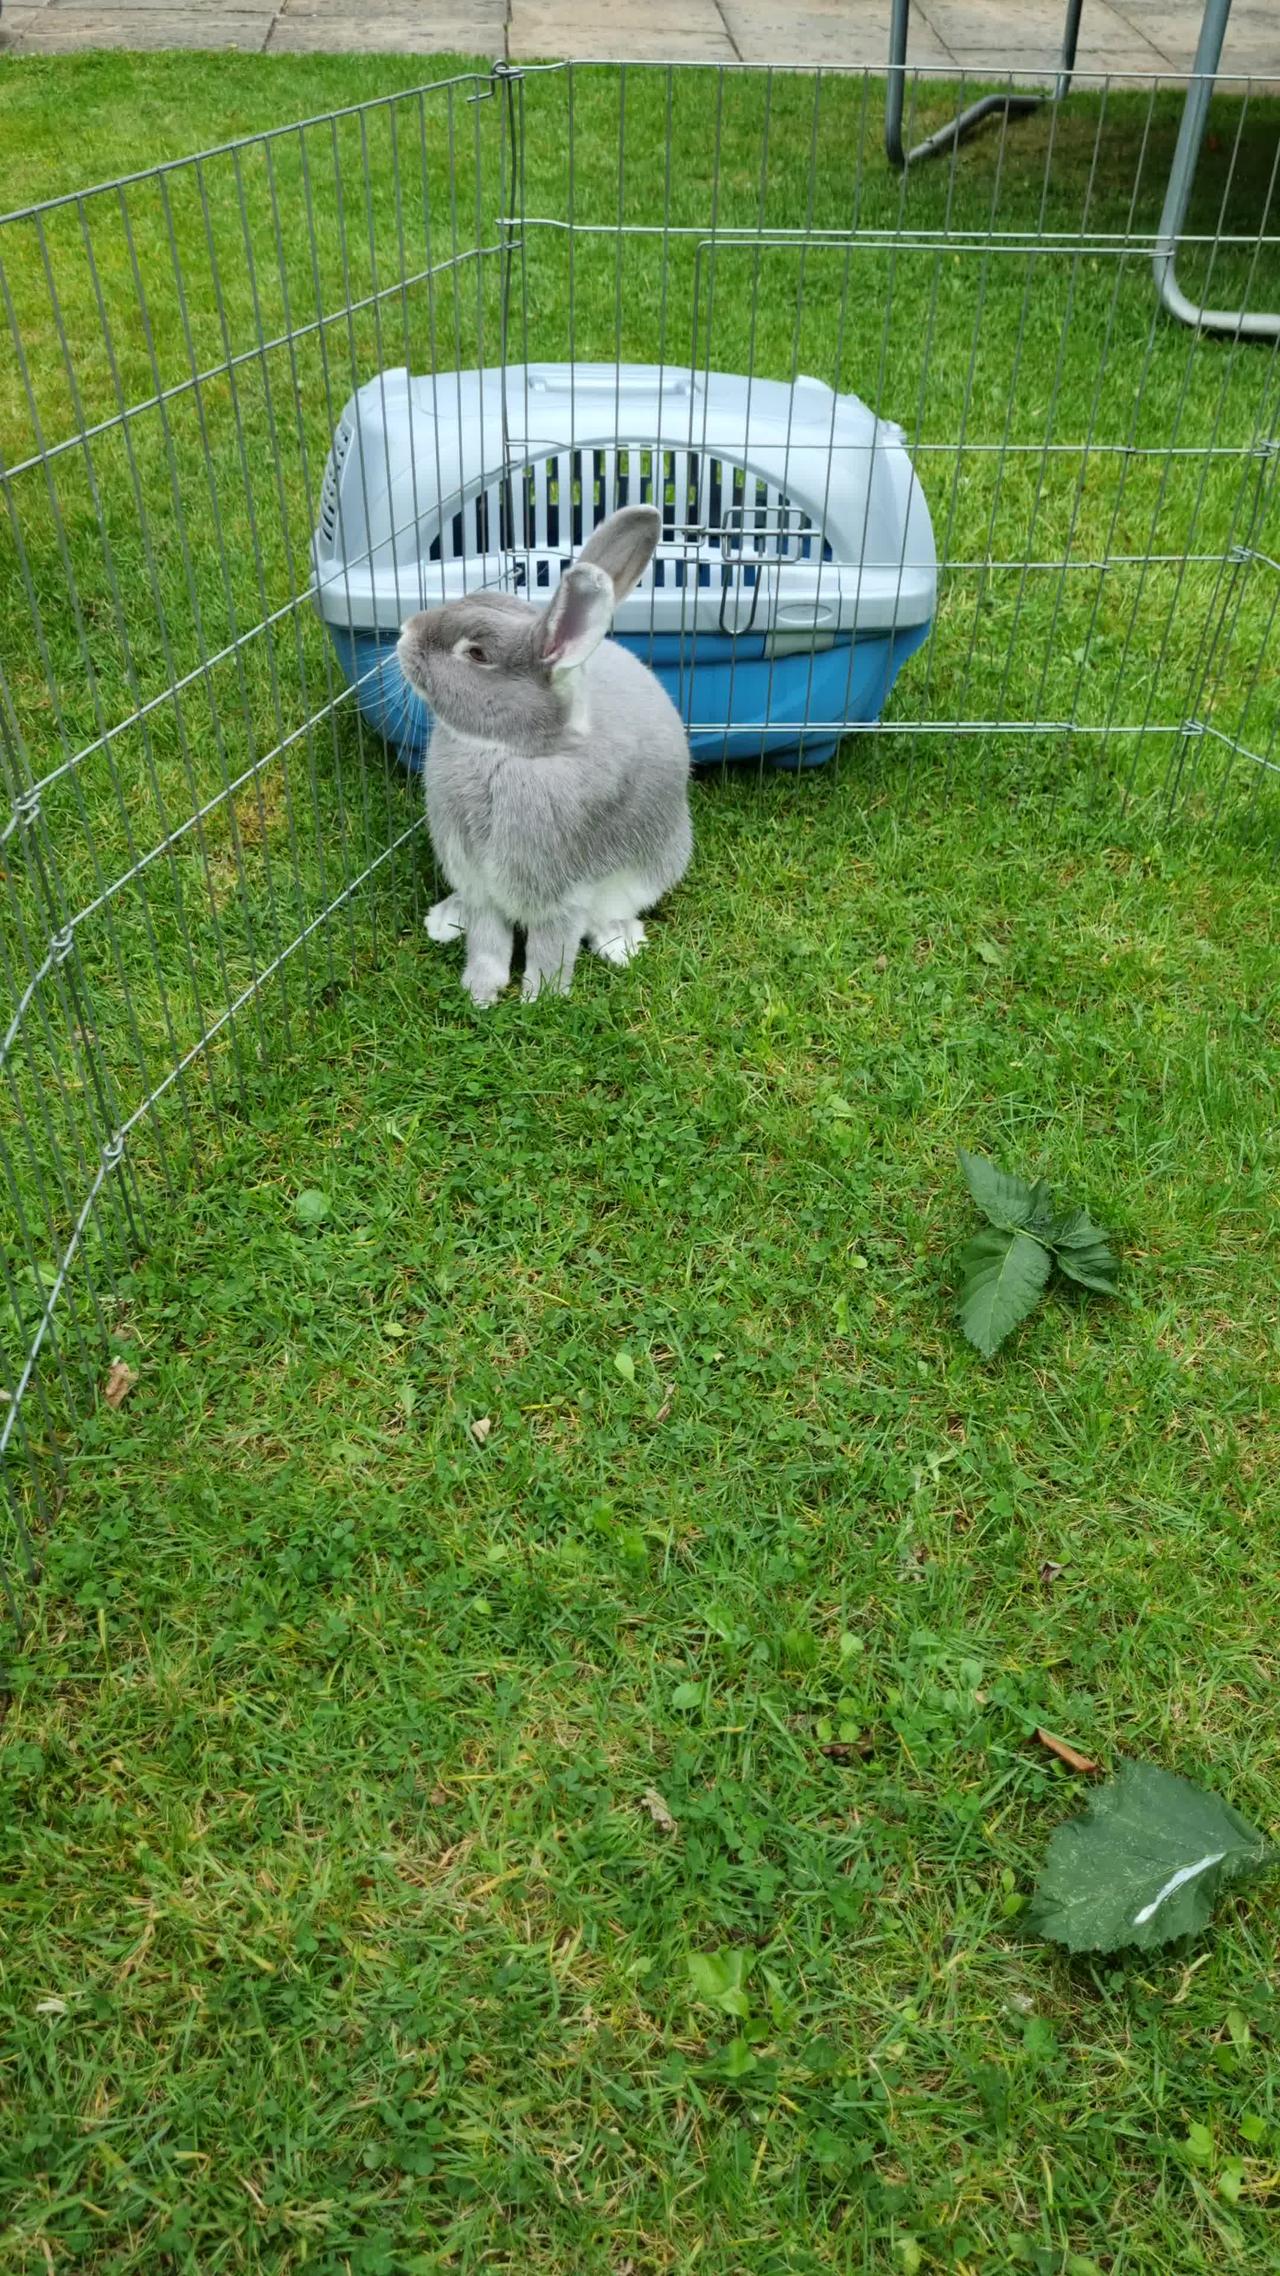 Rabbit vs cat